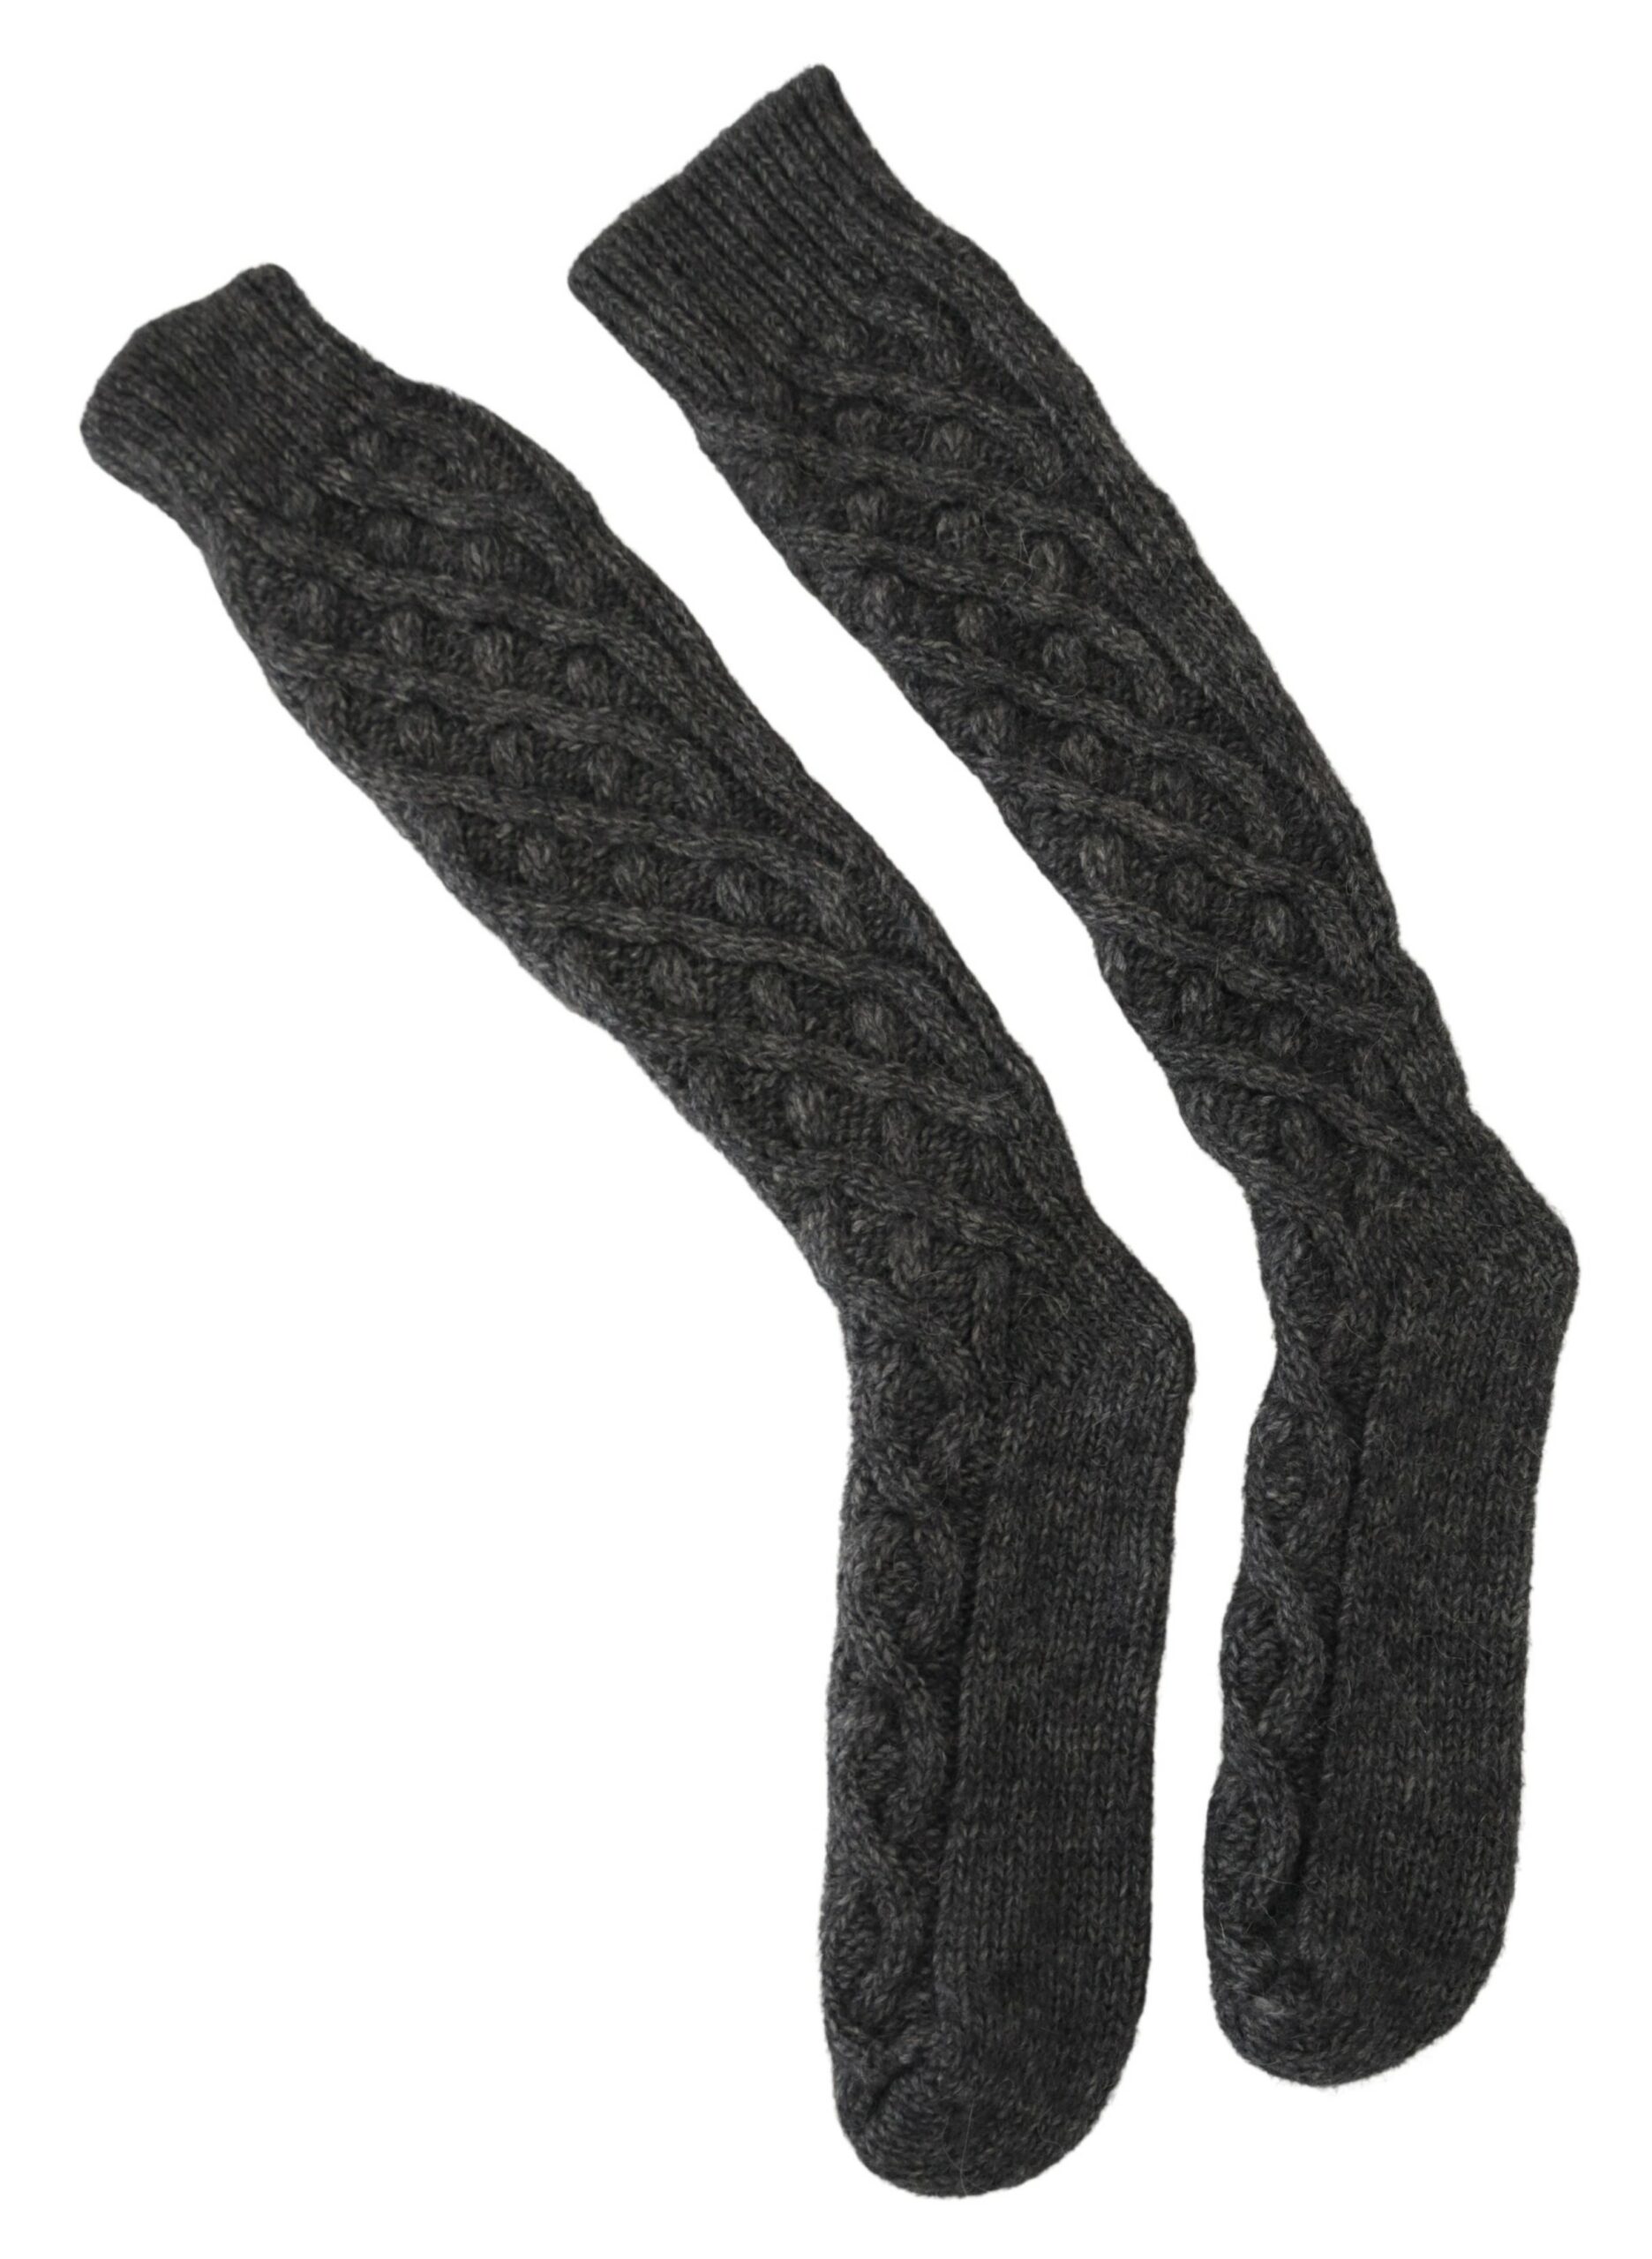 Grey Wool Knit Calf Long Women Socks